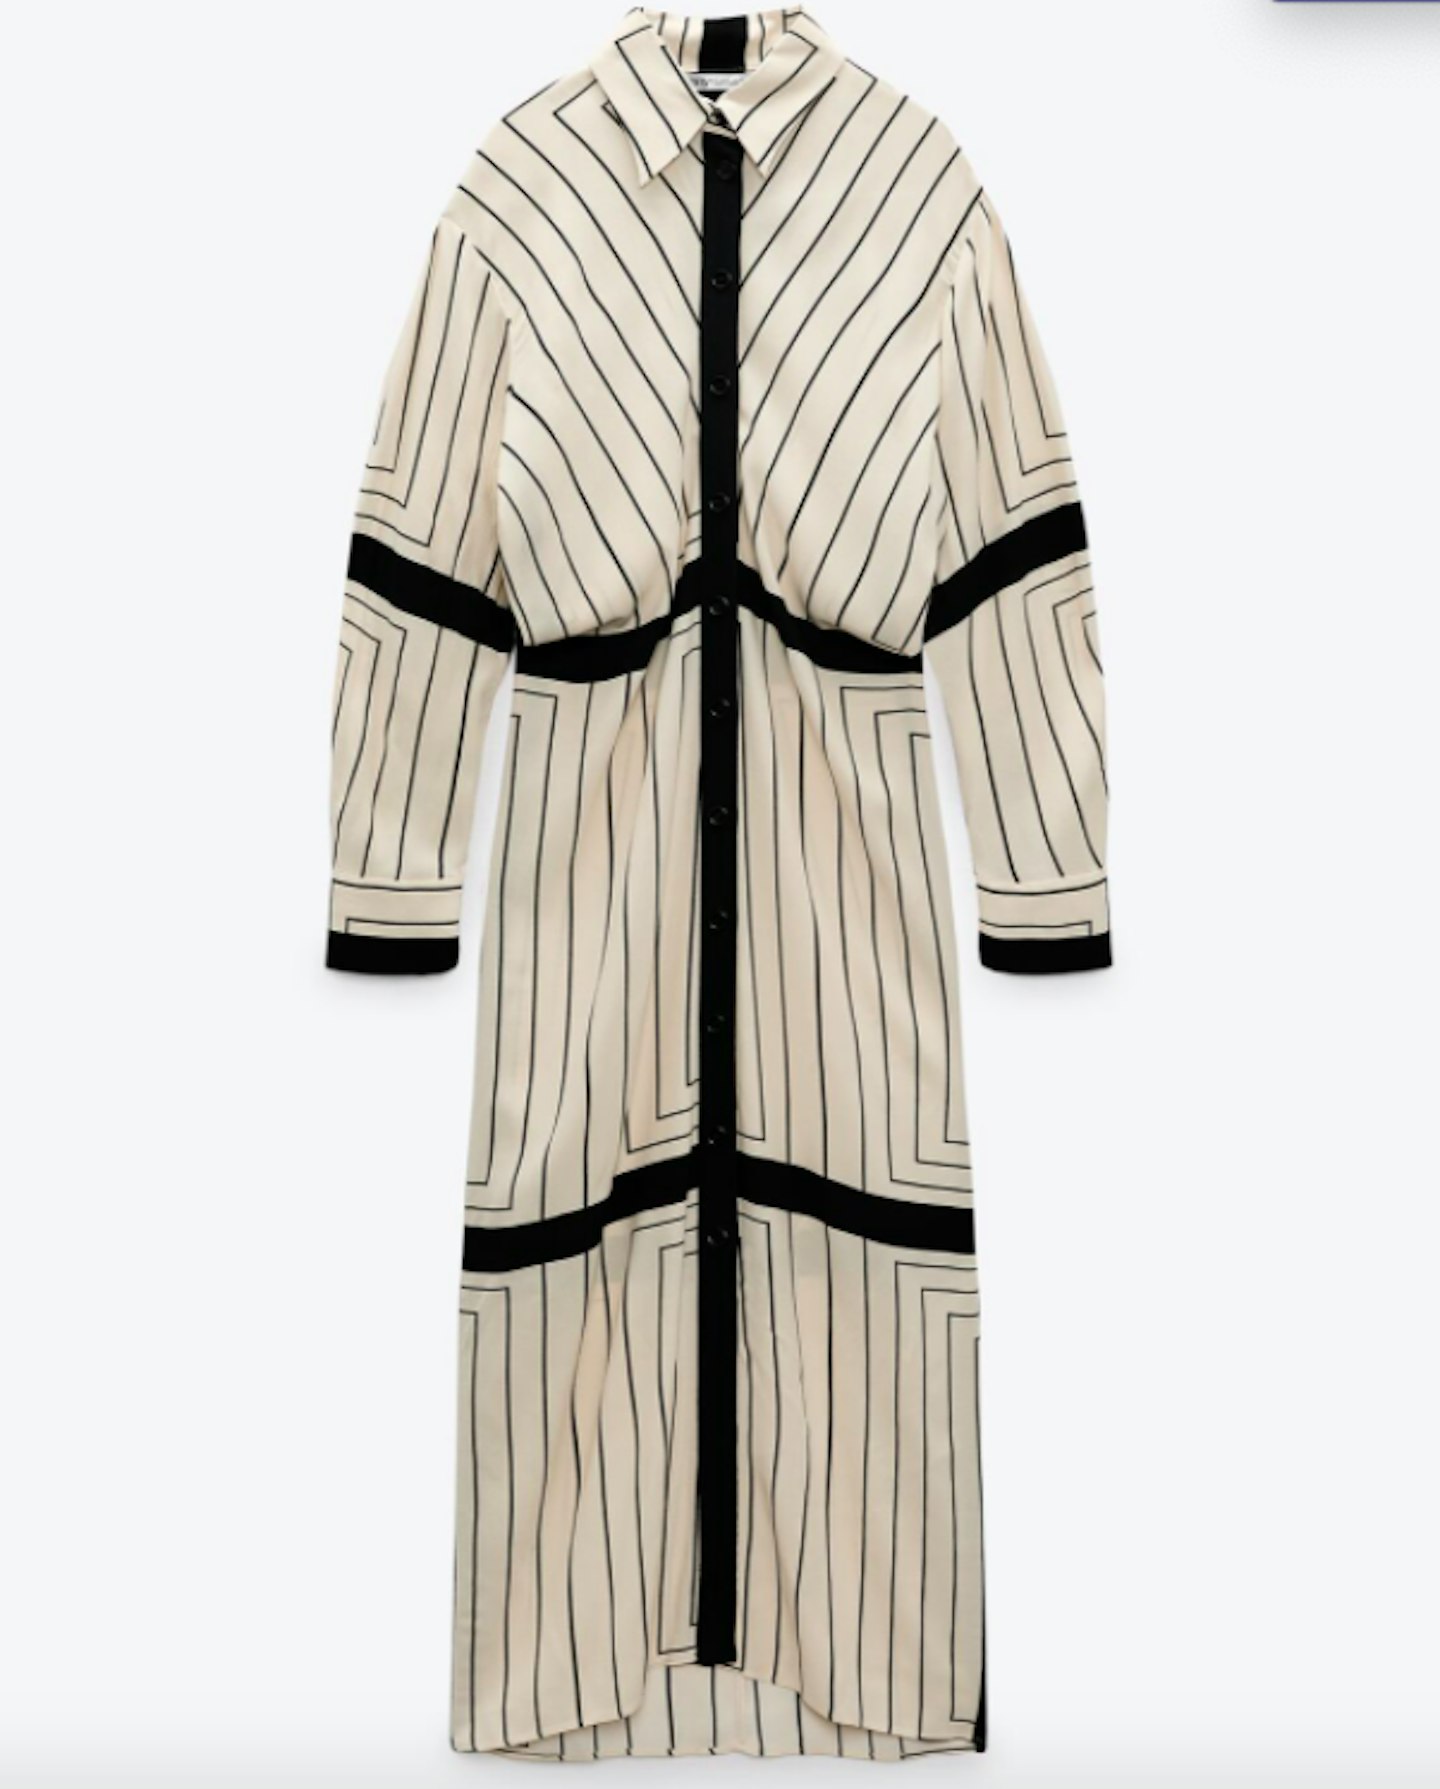 Zara, Striped Shirt Dress, £59.99